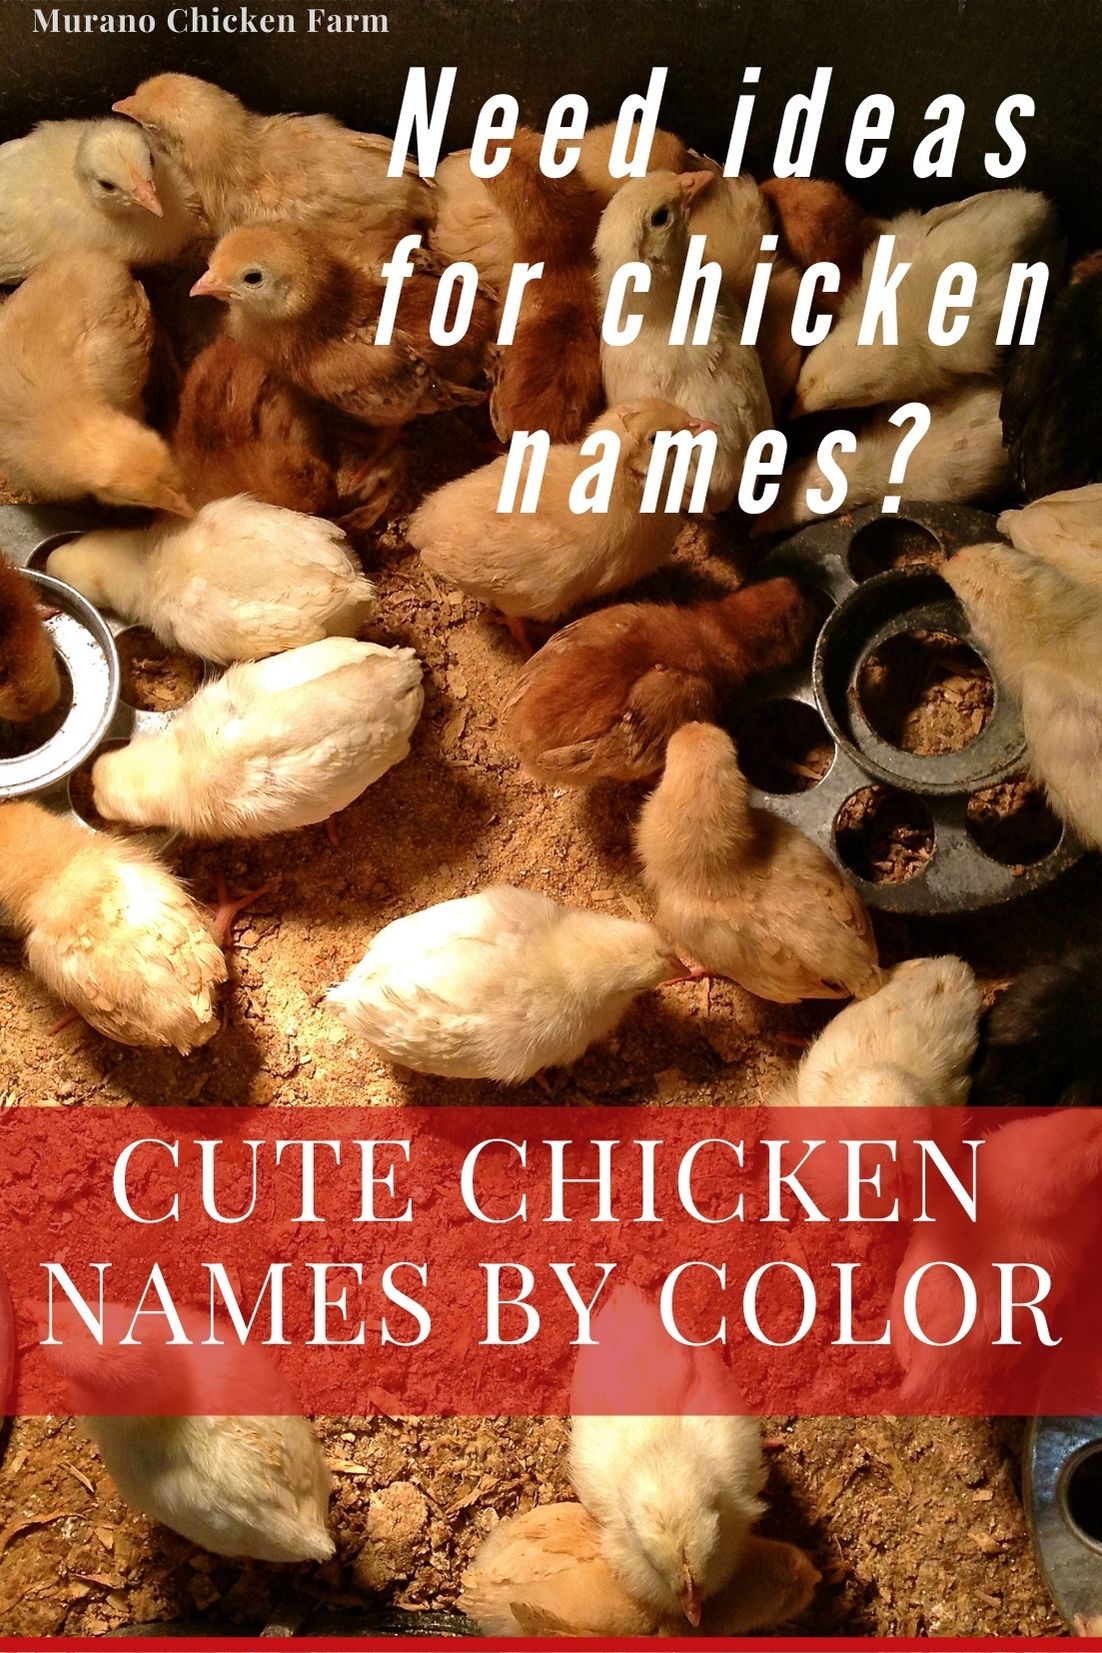 Funny chicken names, by color. - Murano Chicken Farm